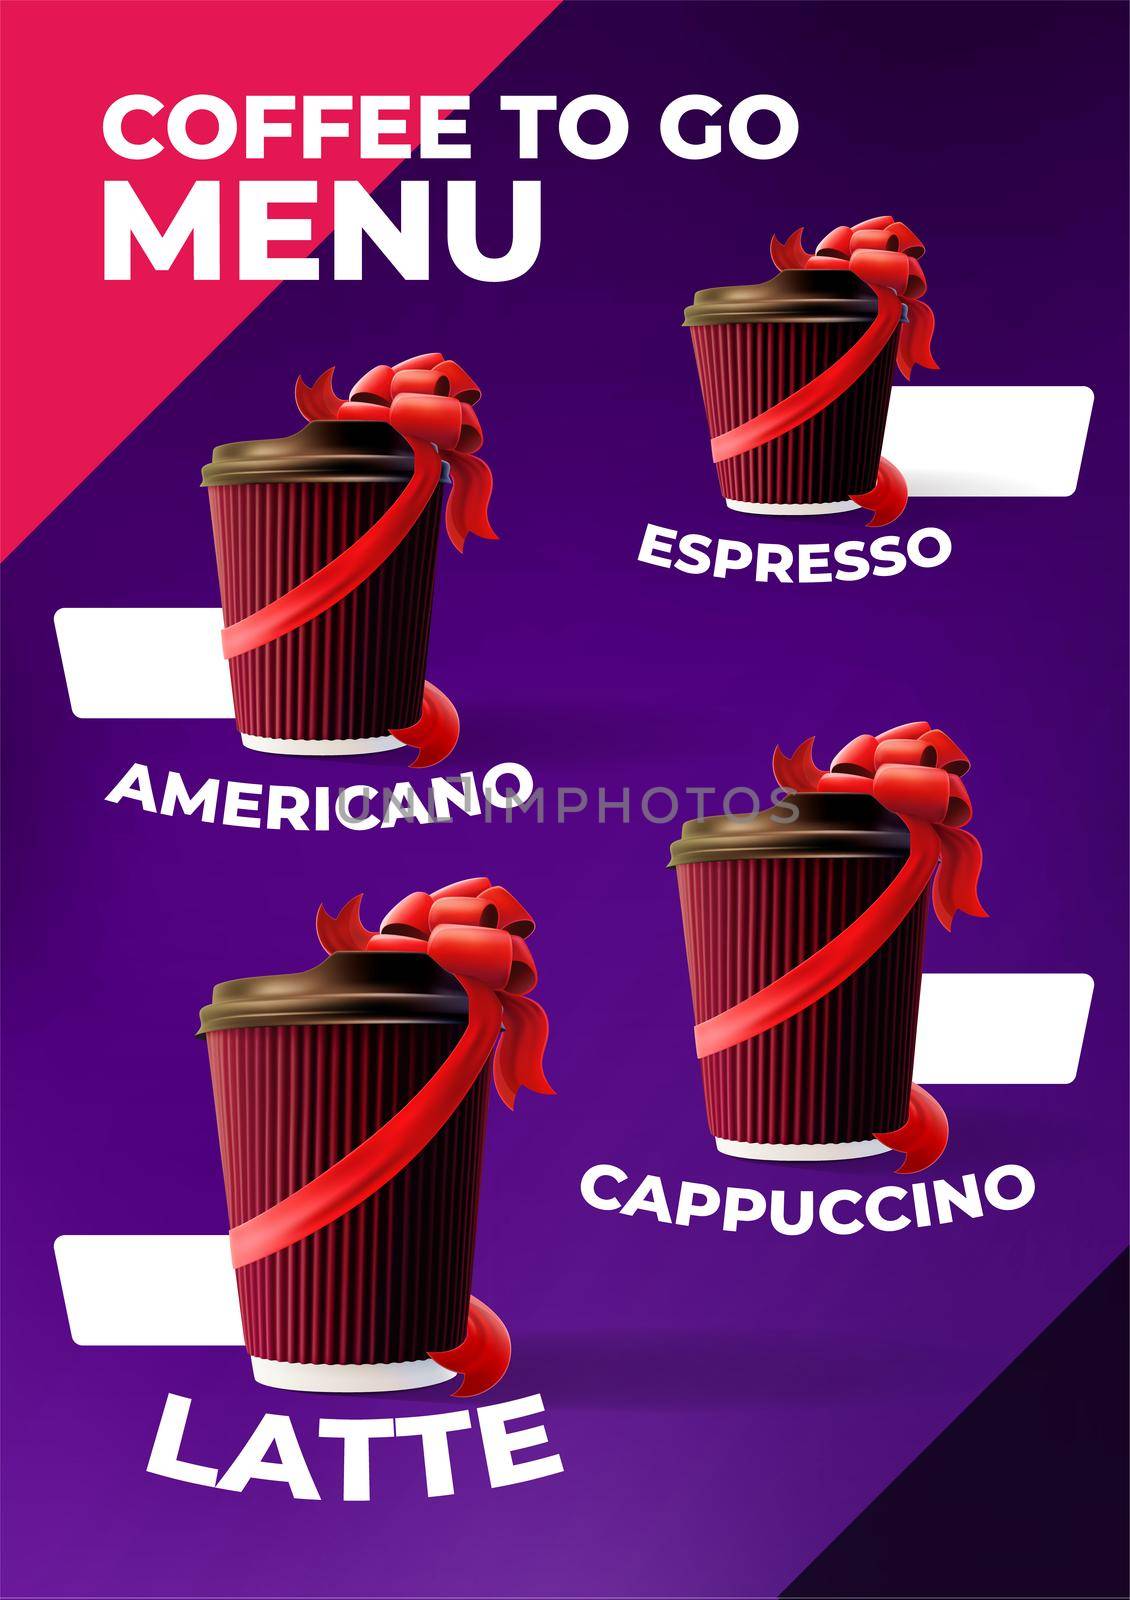 Coffee to Go Menu Poster A4